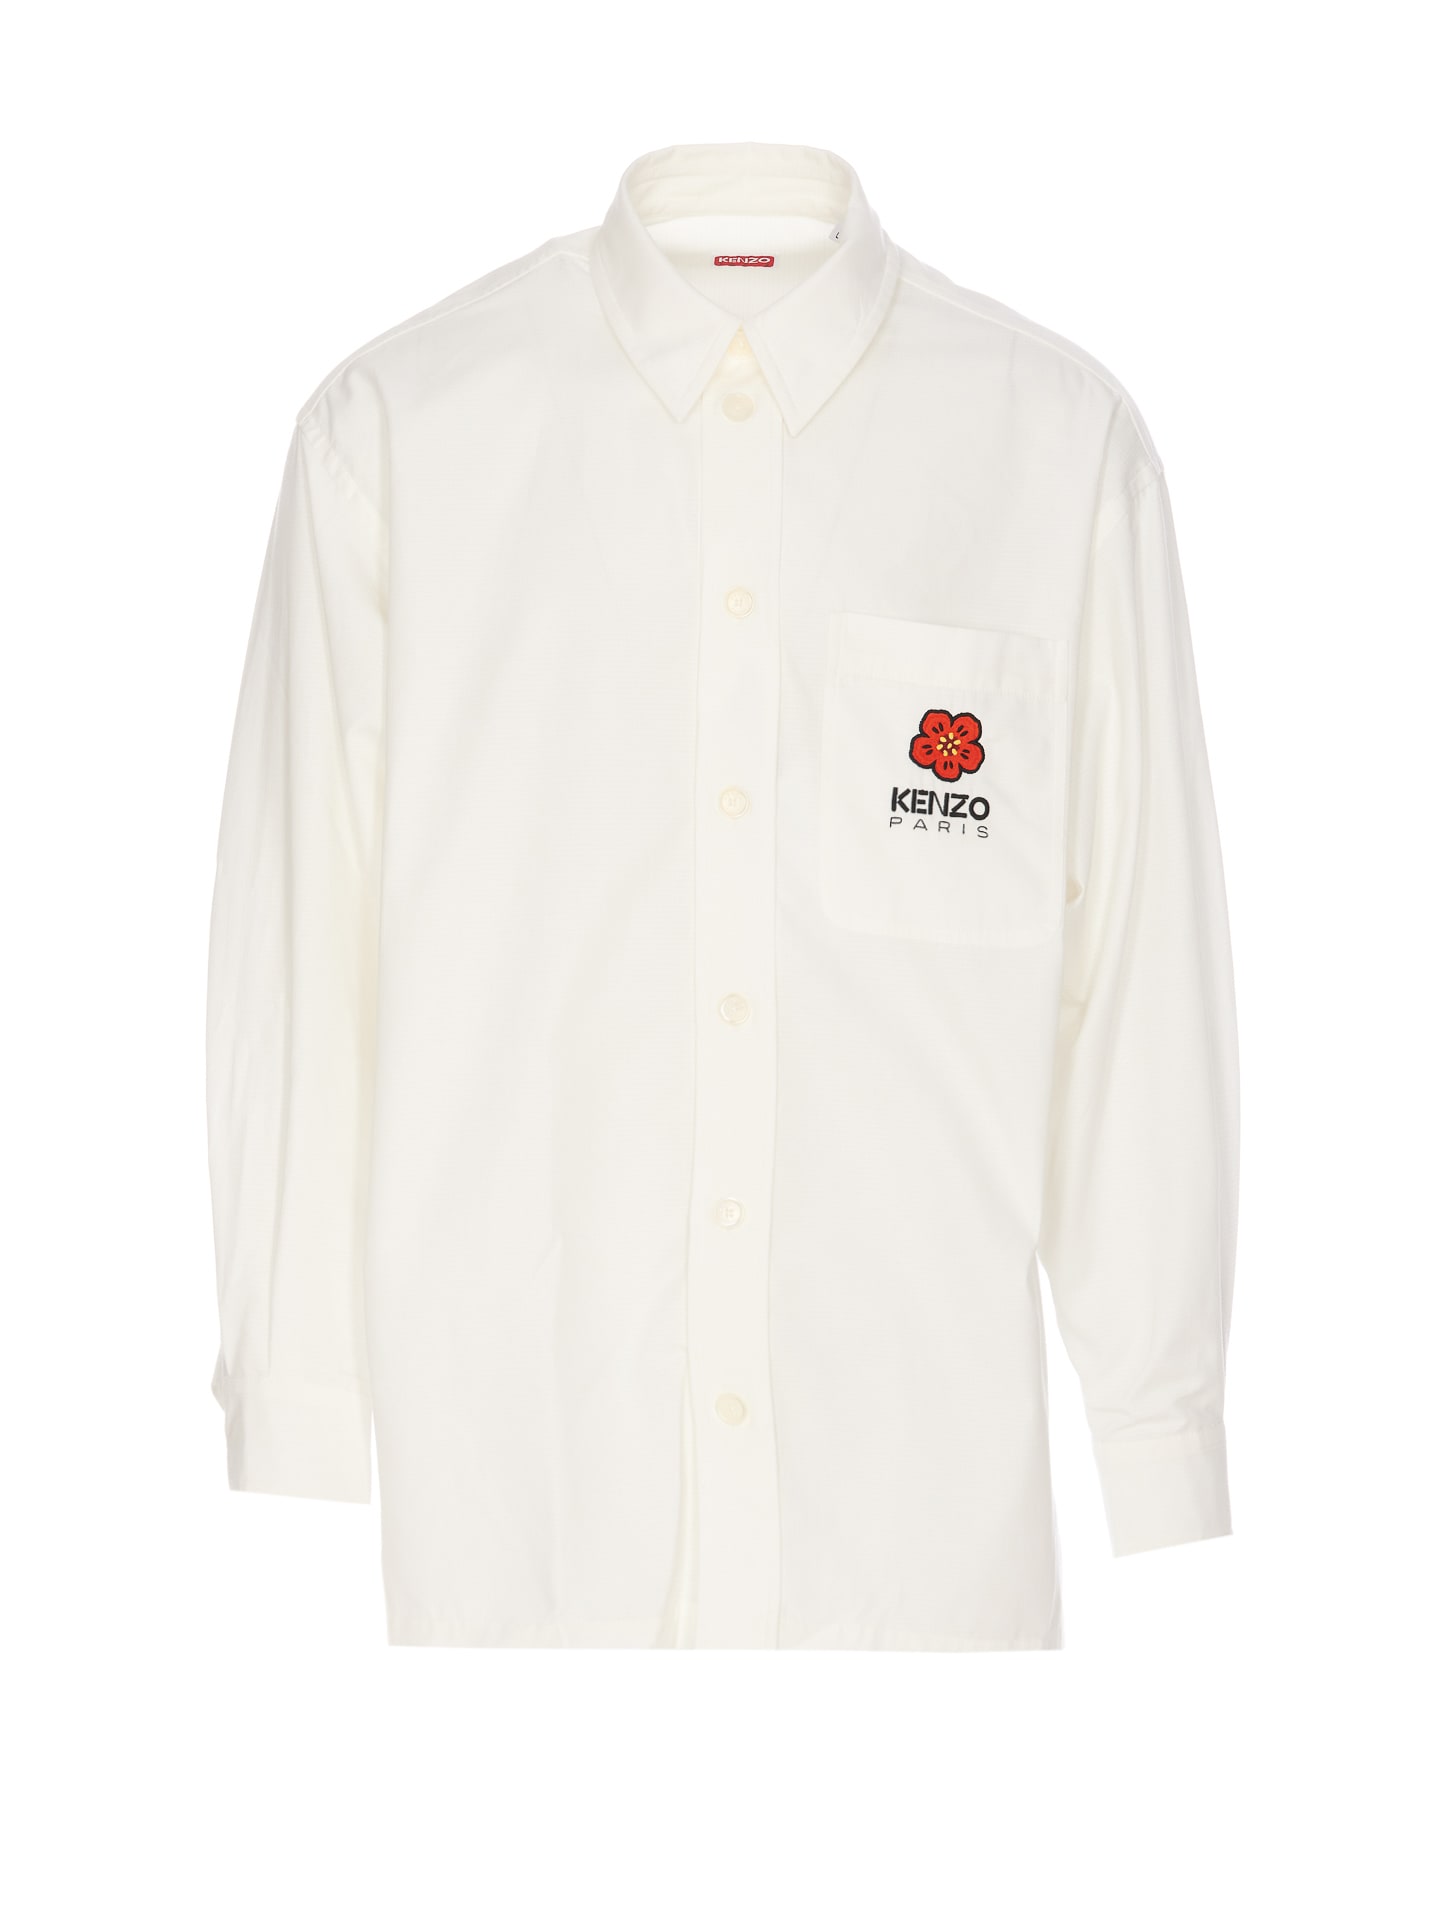 Kenzo Boke Crest Oversize Shirt In White